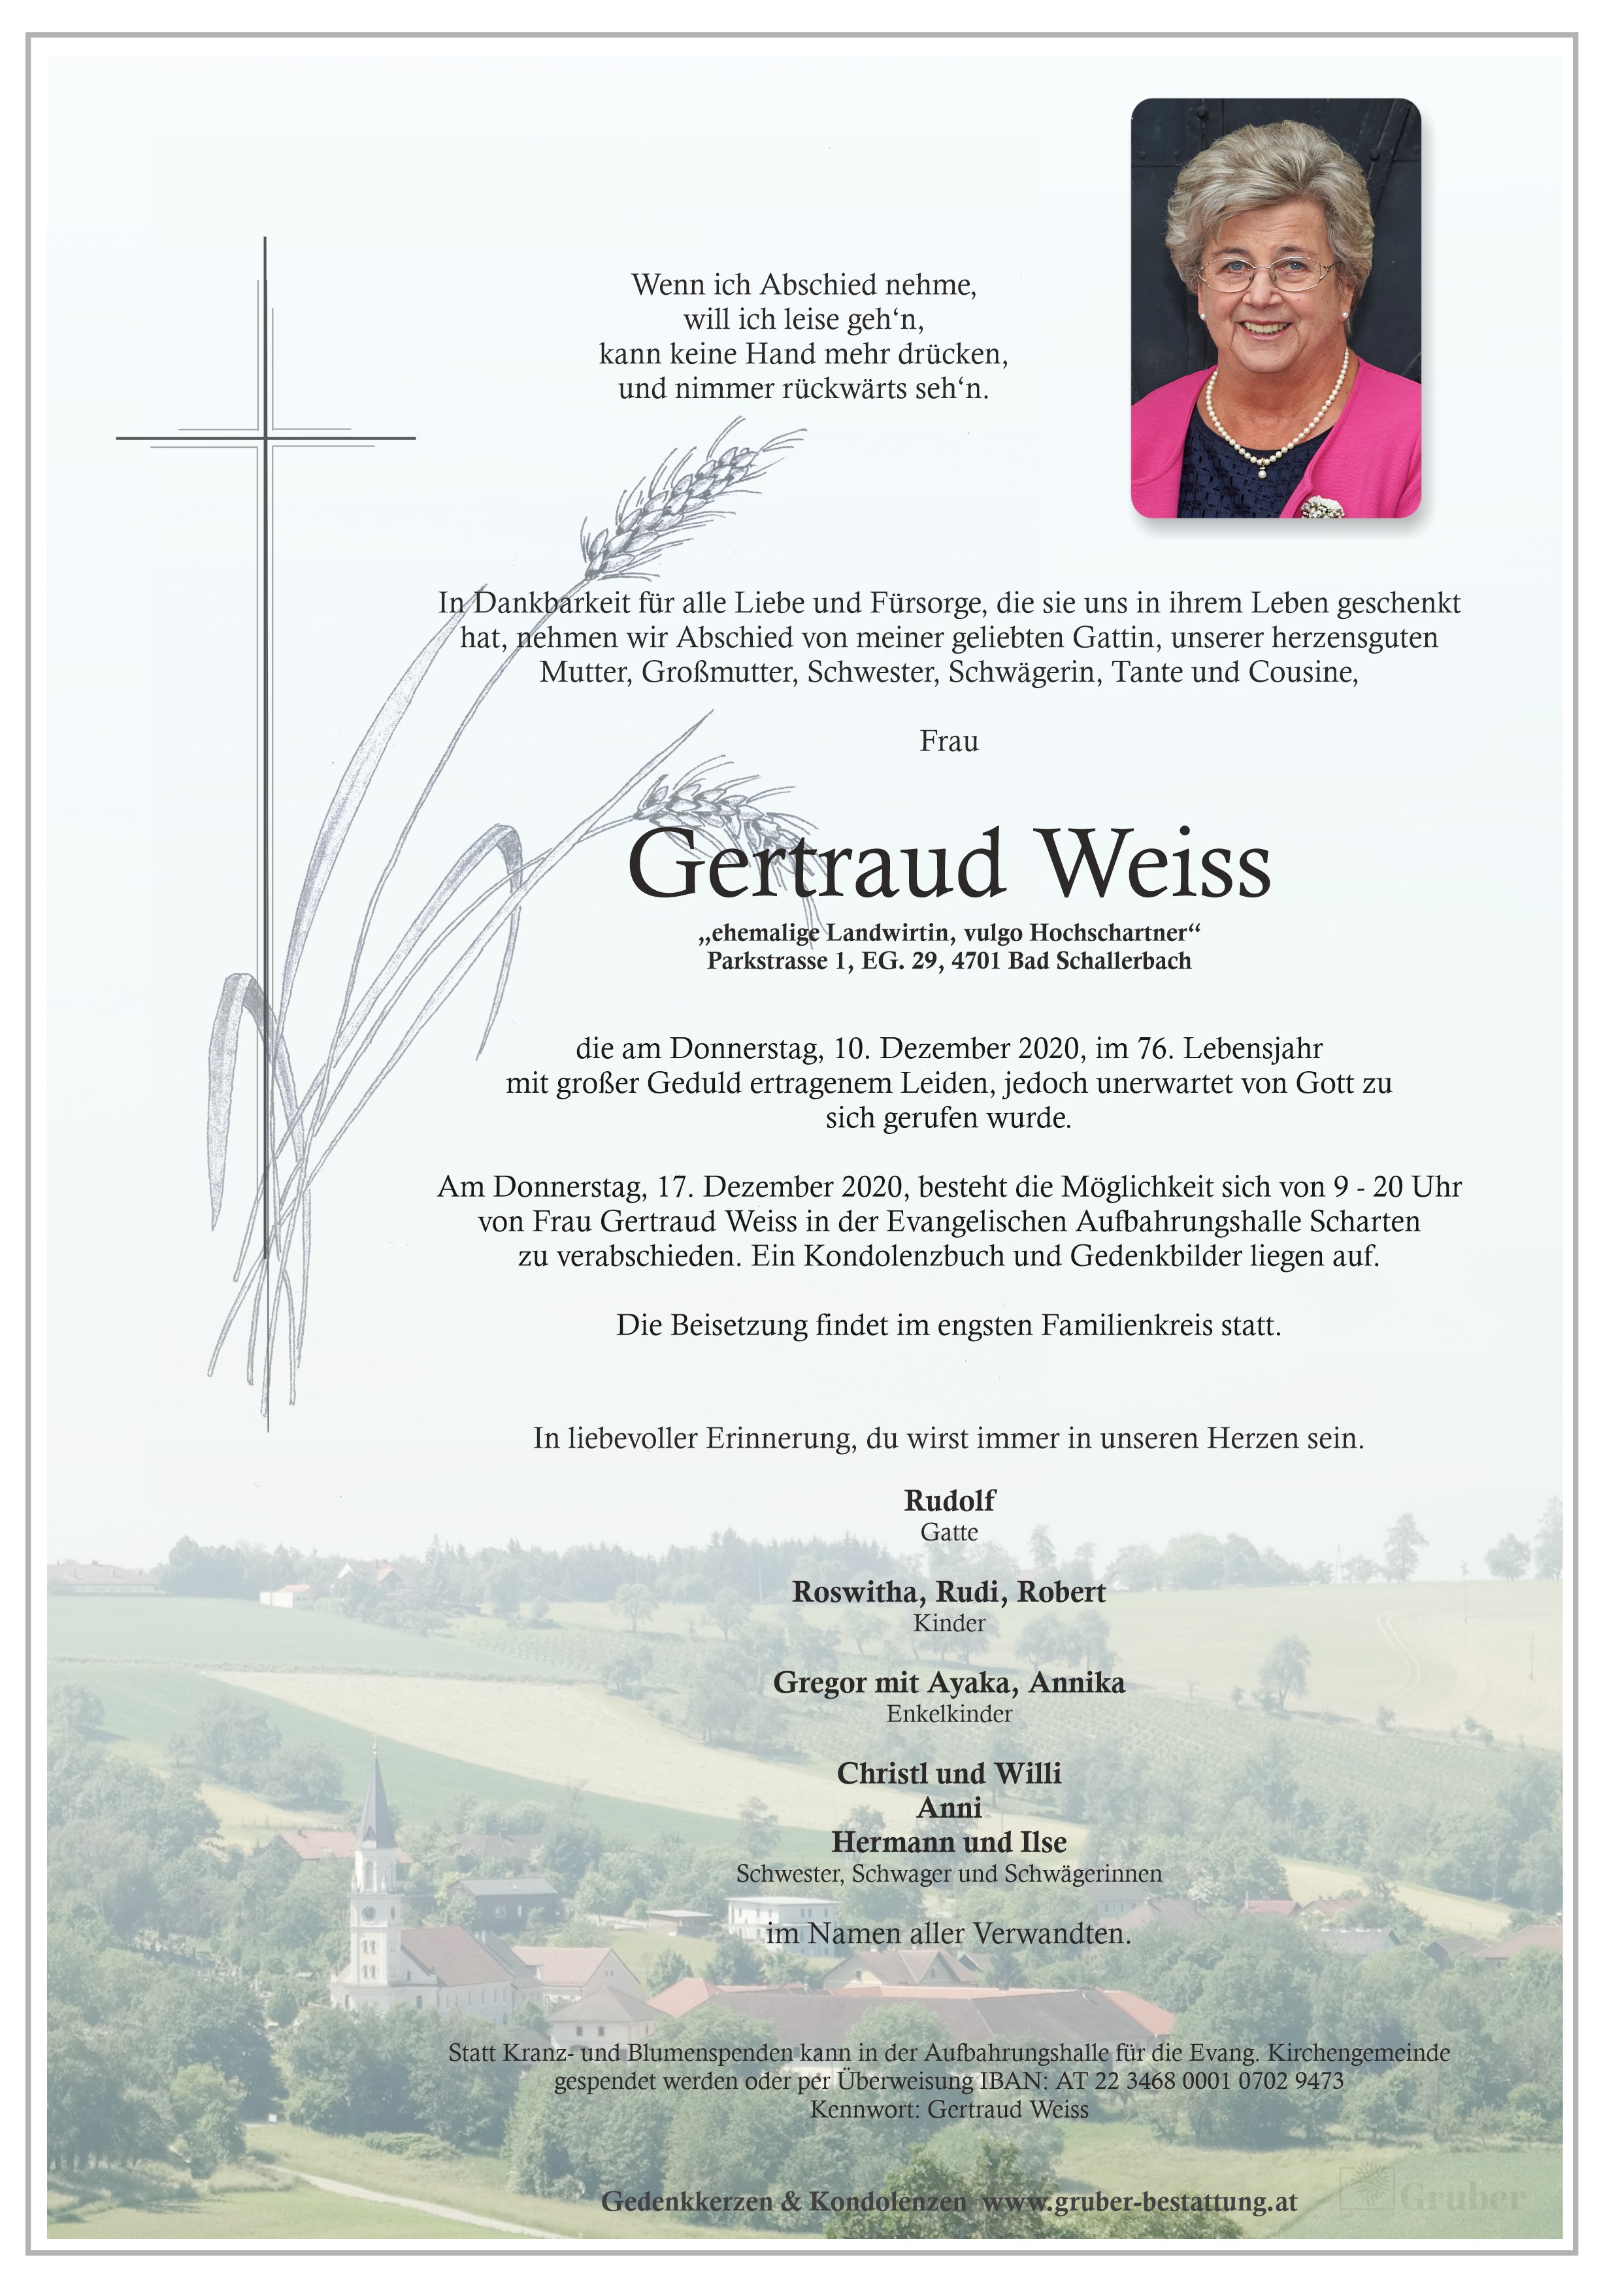 Gertraud Weiss (Bad Schallerbach)